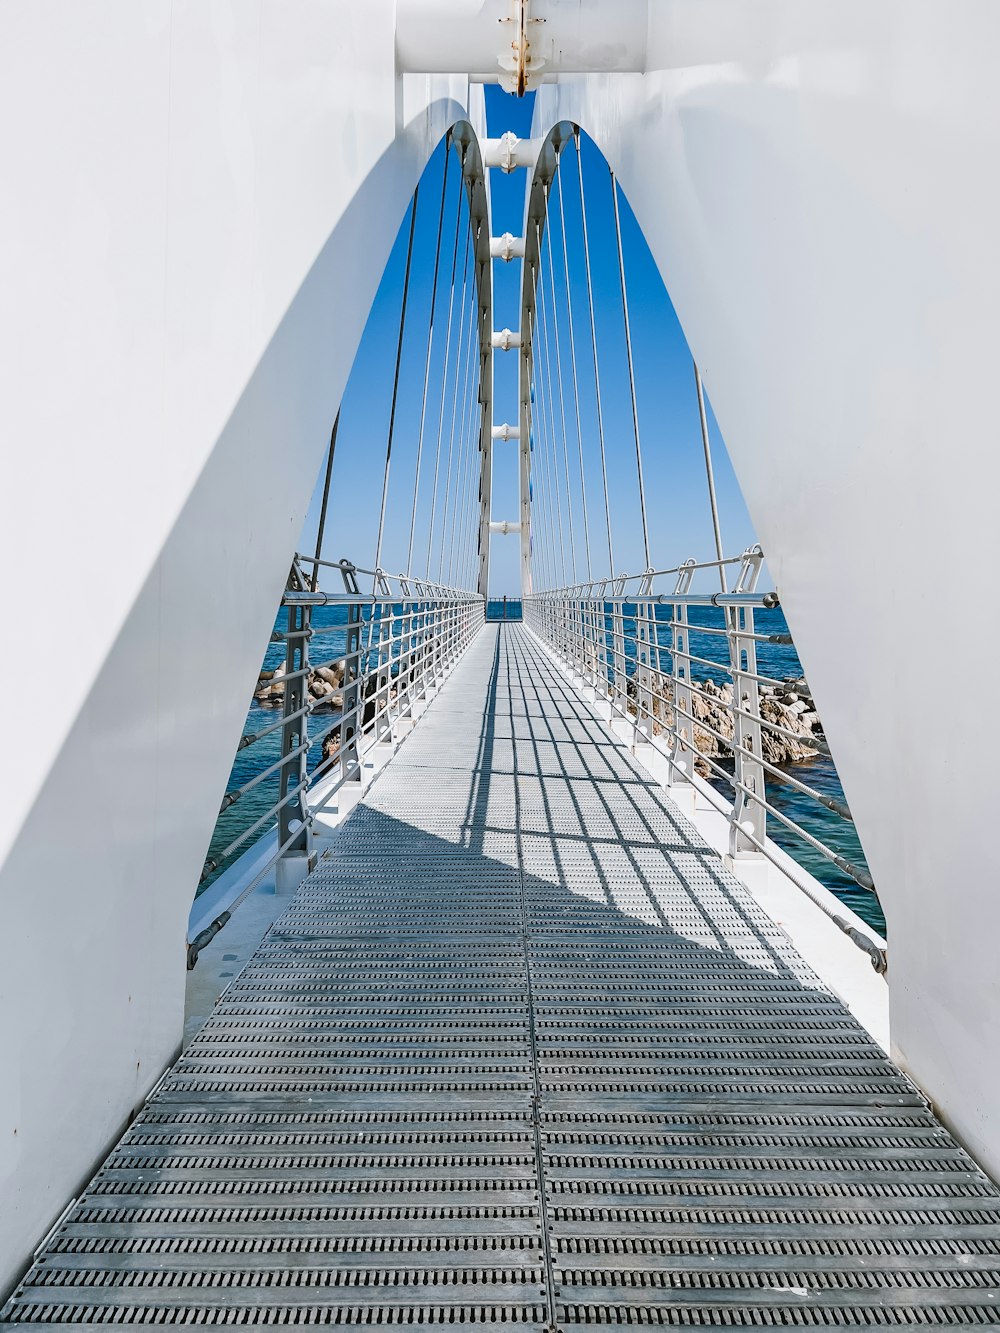 a long bridge with blue railings